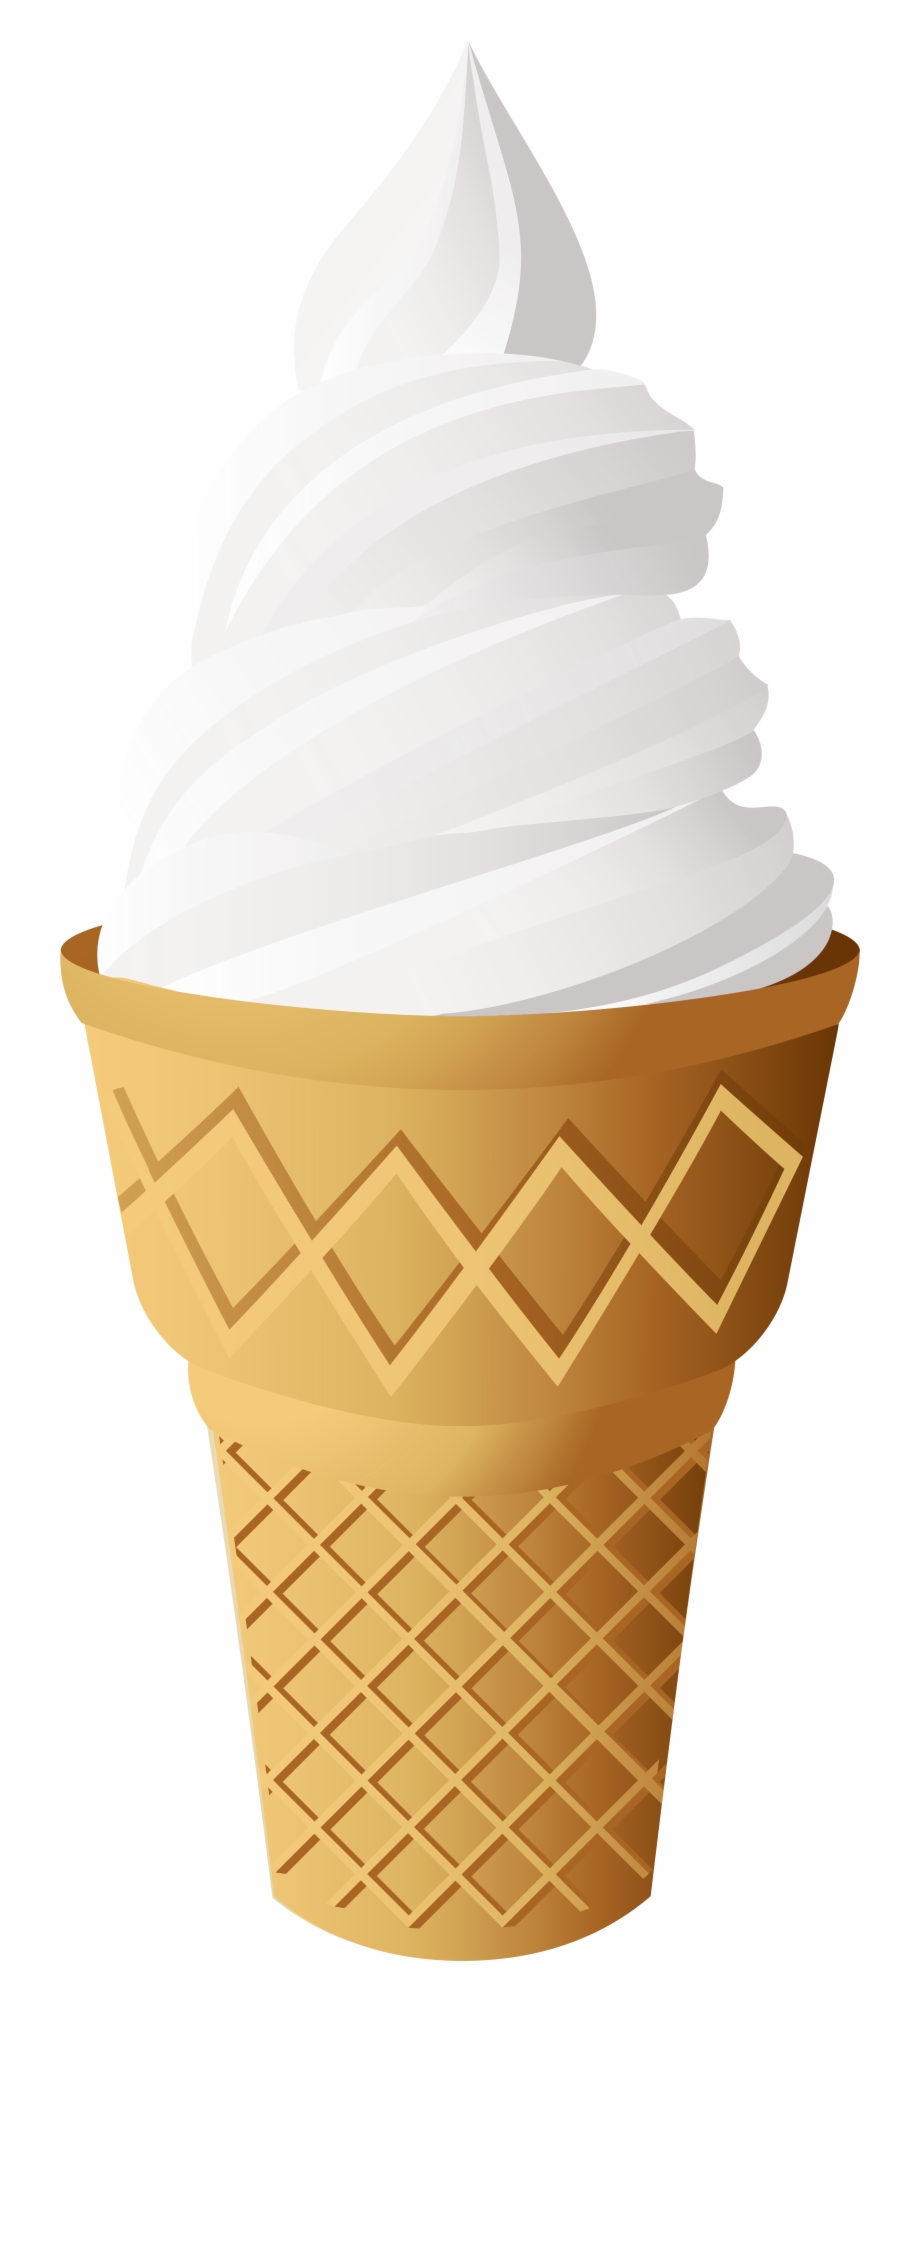 Vanilla Ice Cream Cone Png Clip Art